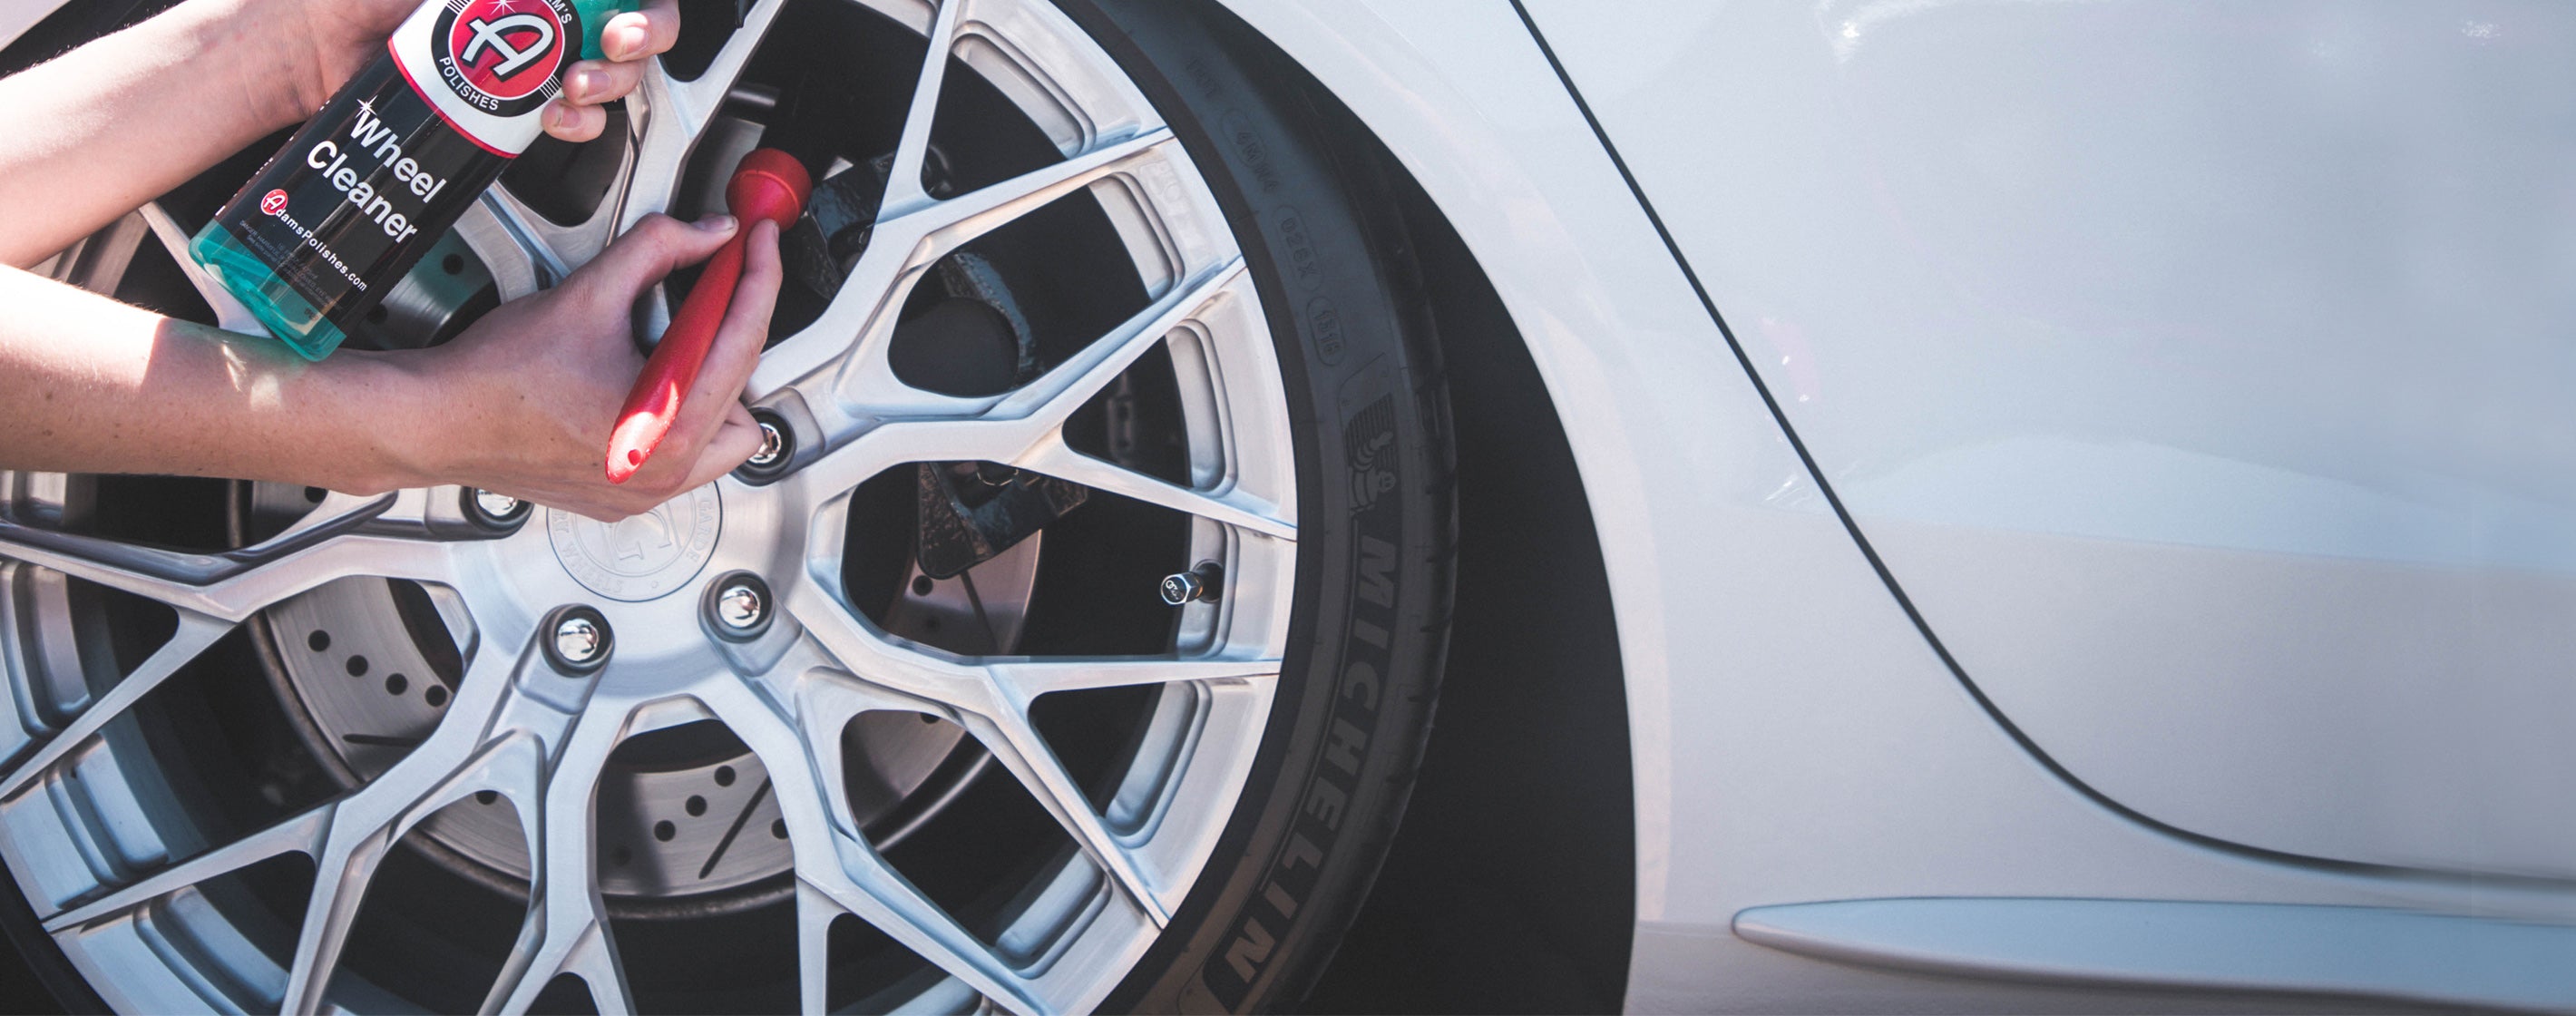 Platinum Polishes 🔴 on Instagram: Adam's Wheel Cleaner Easily